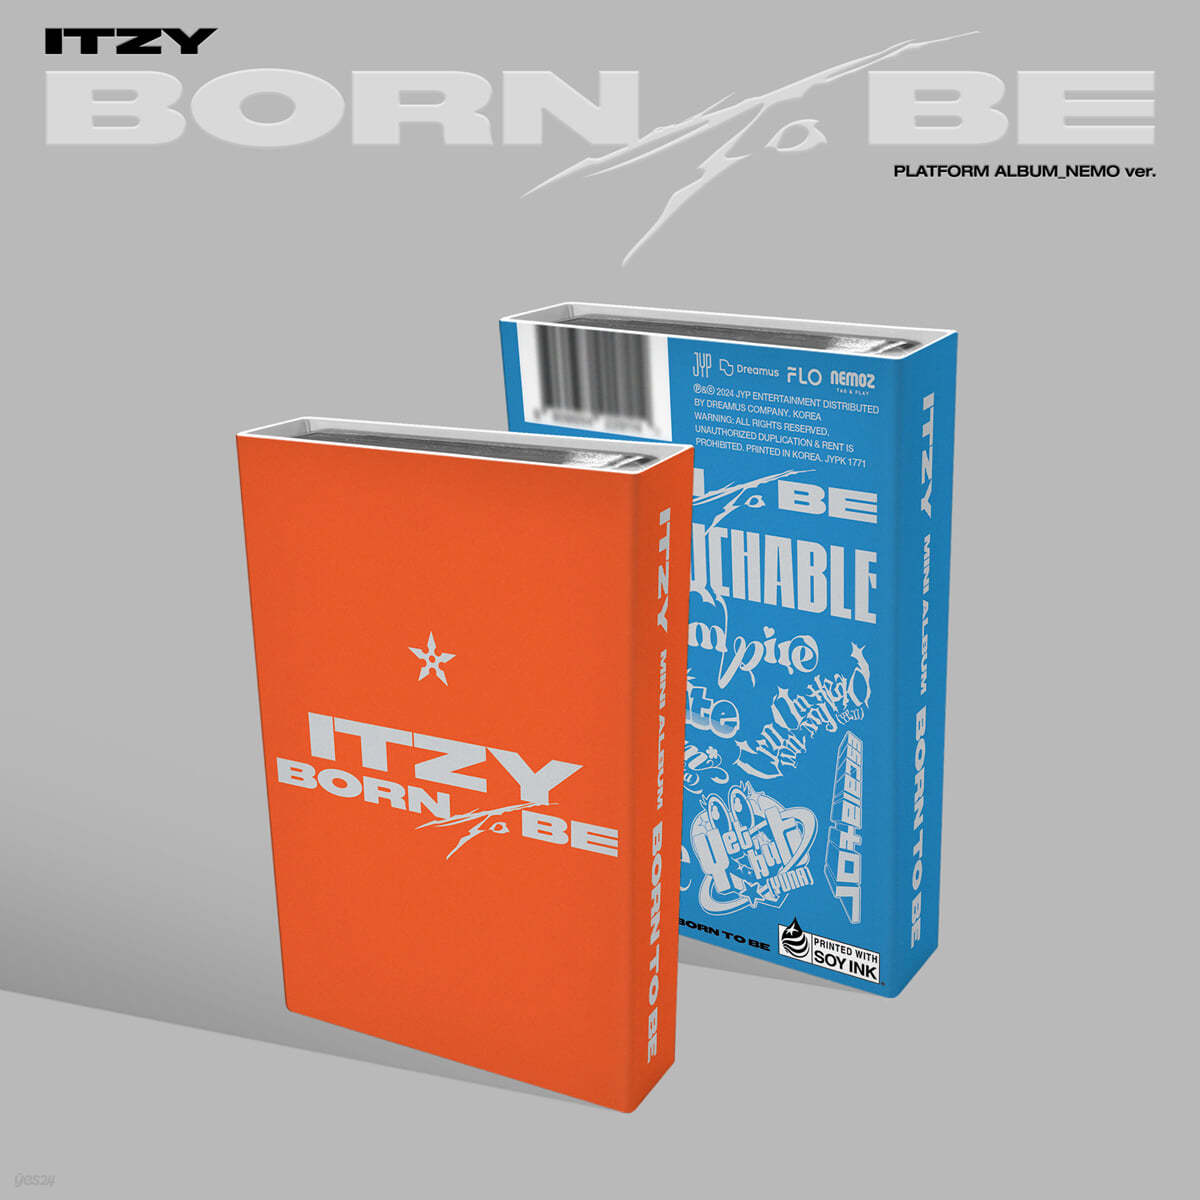 ITZY – Born To Be (Platform Album_Nemo Ver.)